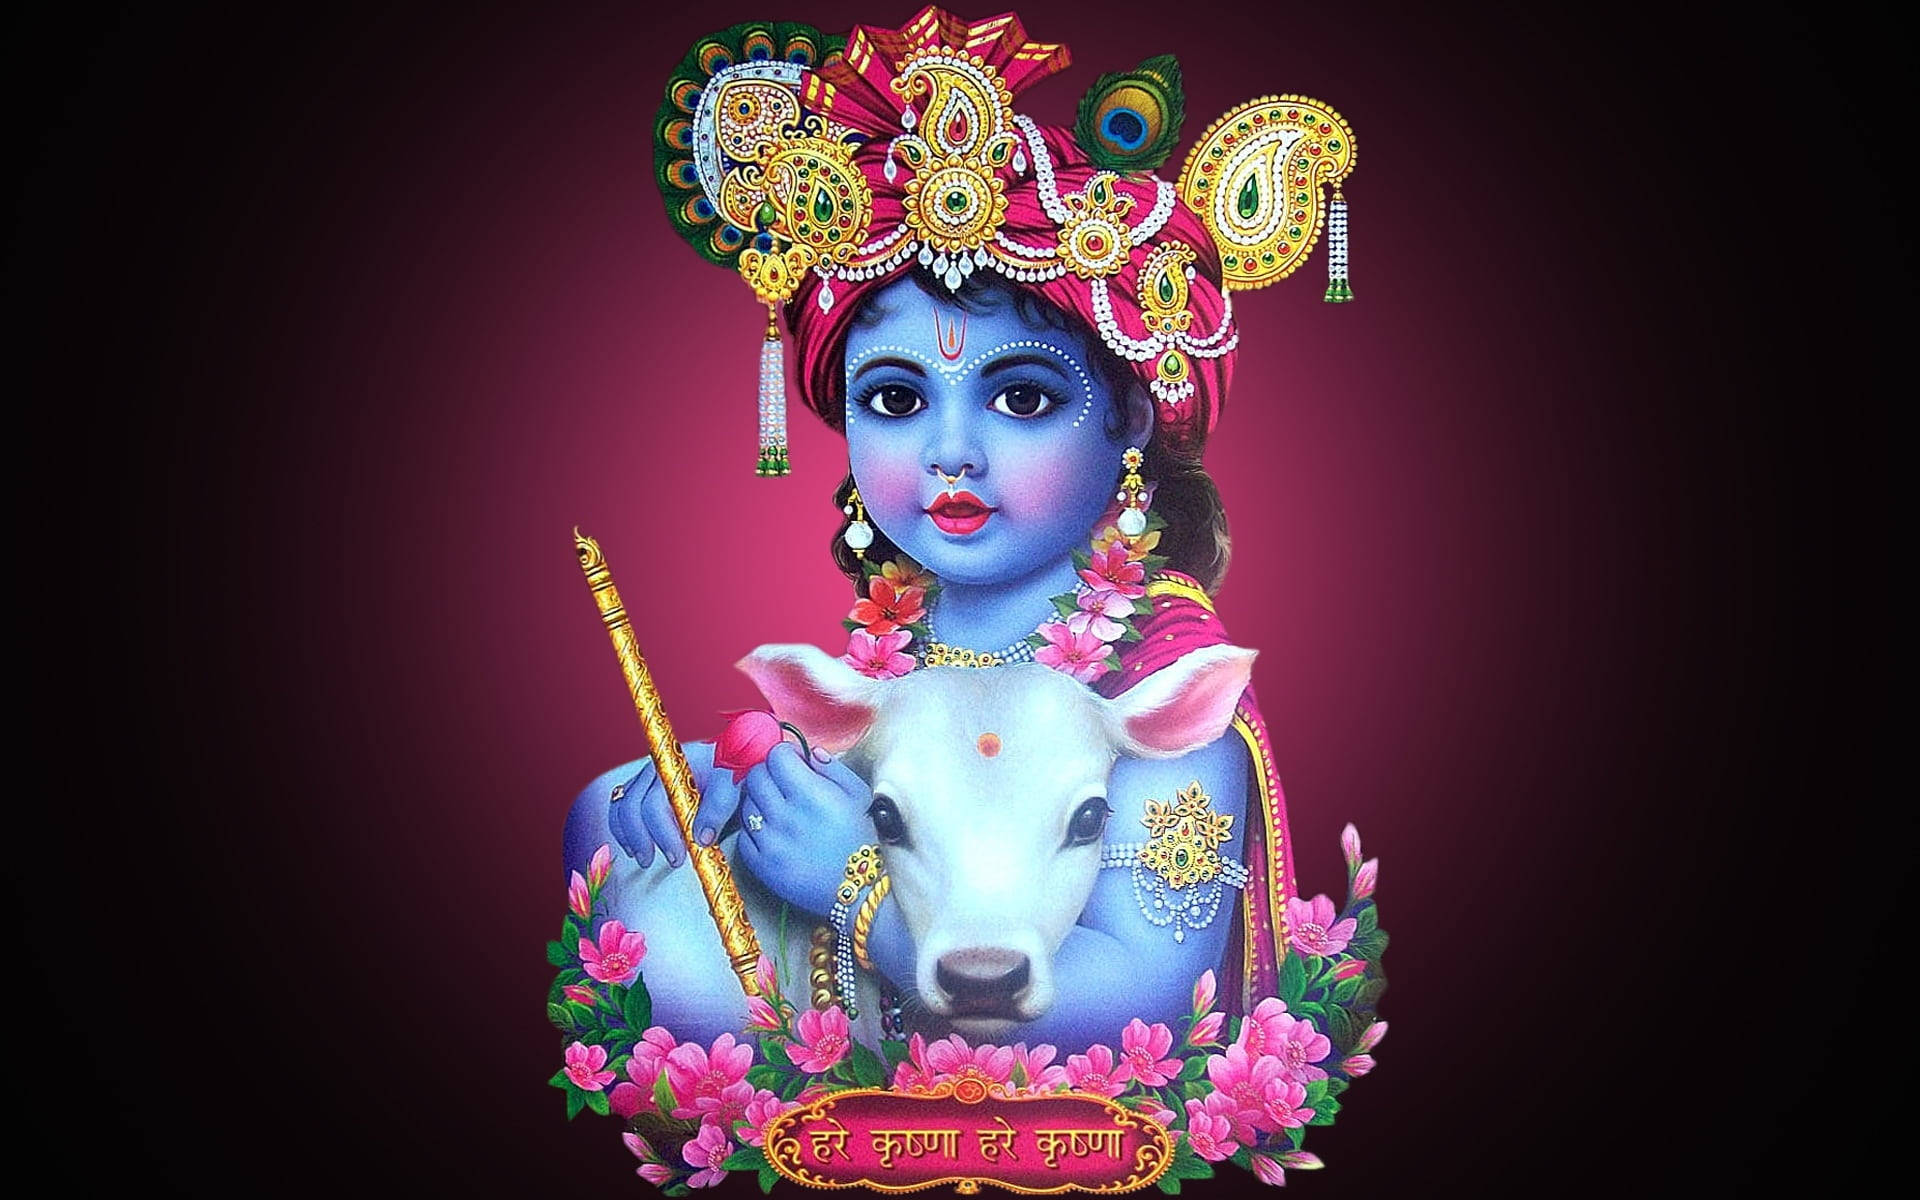 Shri Krishna Against Black And Pink Background